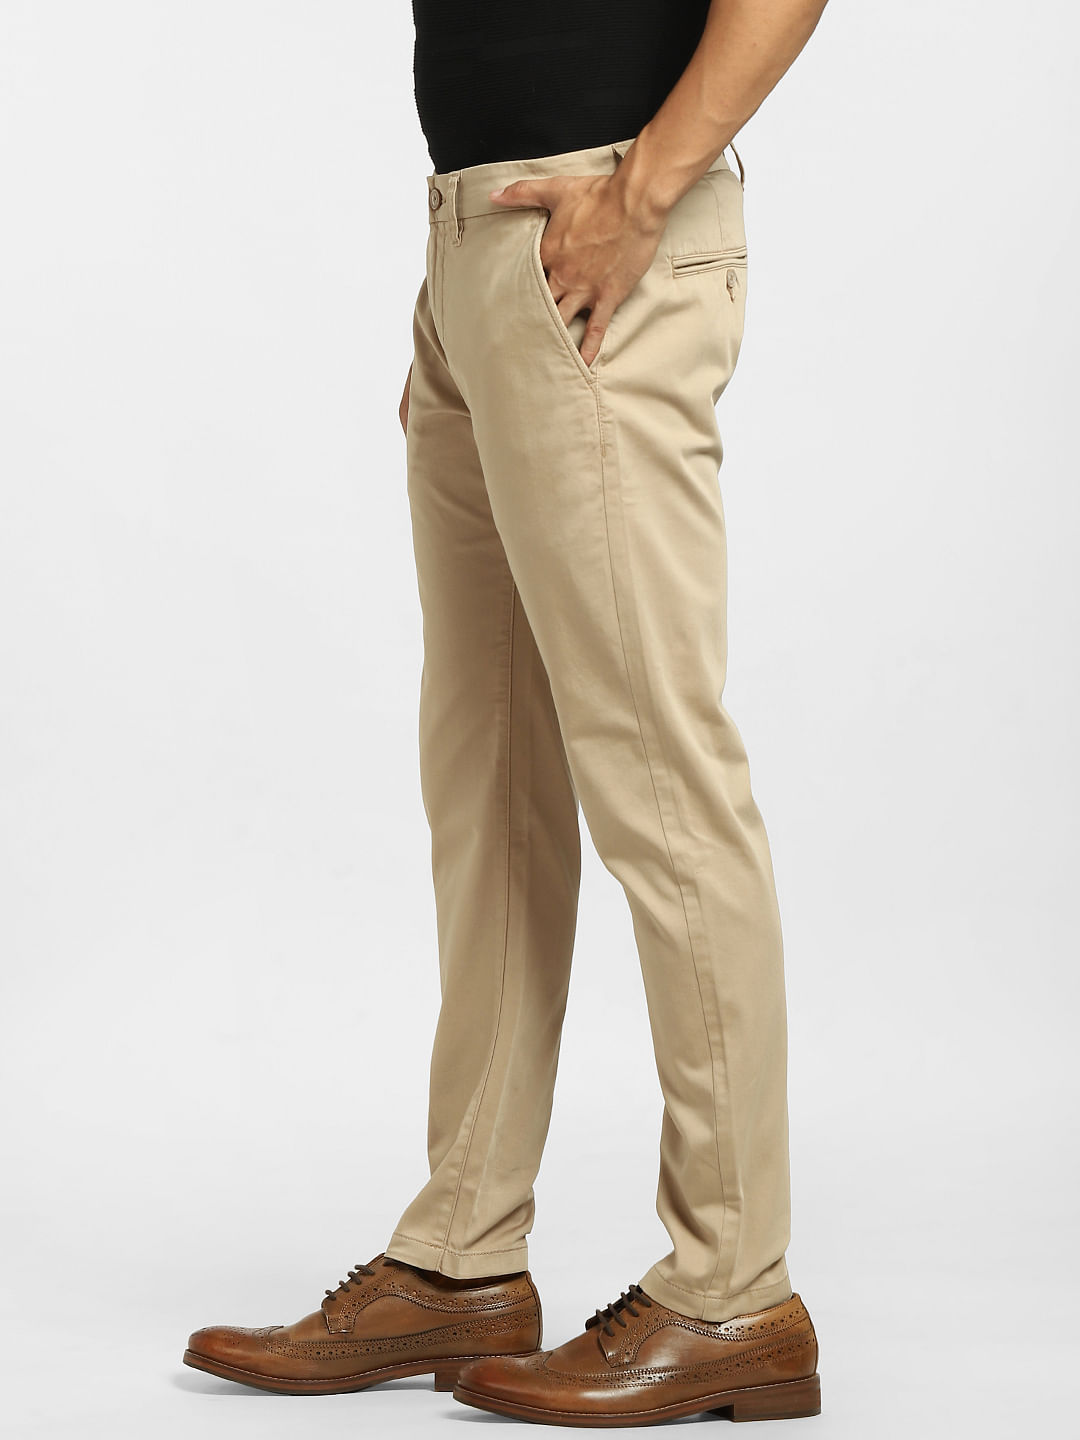 Straped Low Rise Khaki Men's Drop Crotch Pants | Wholesale Boho Clothing